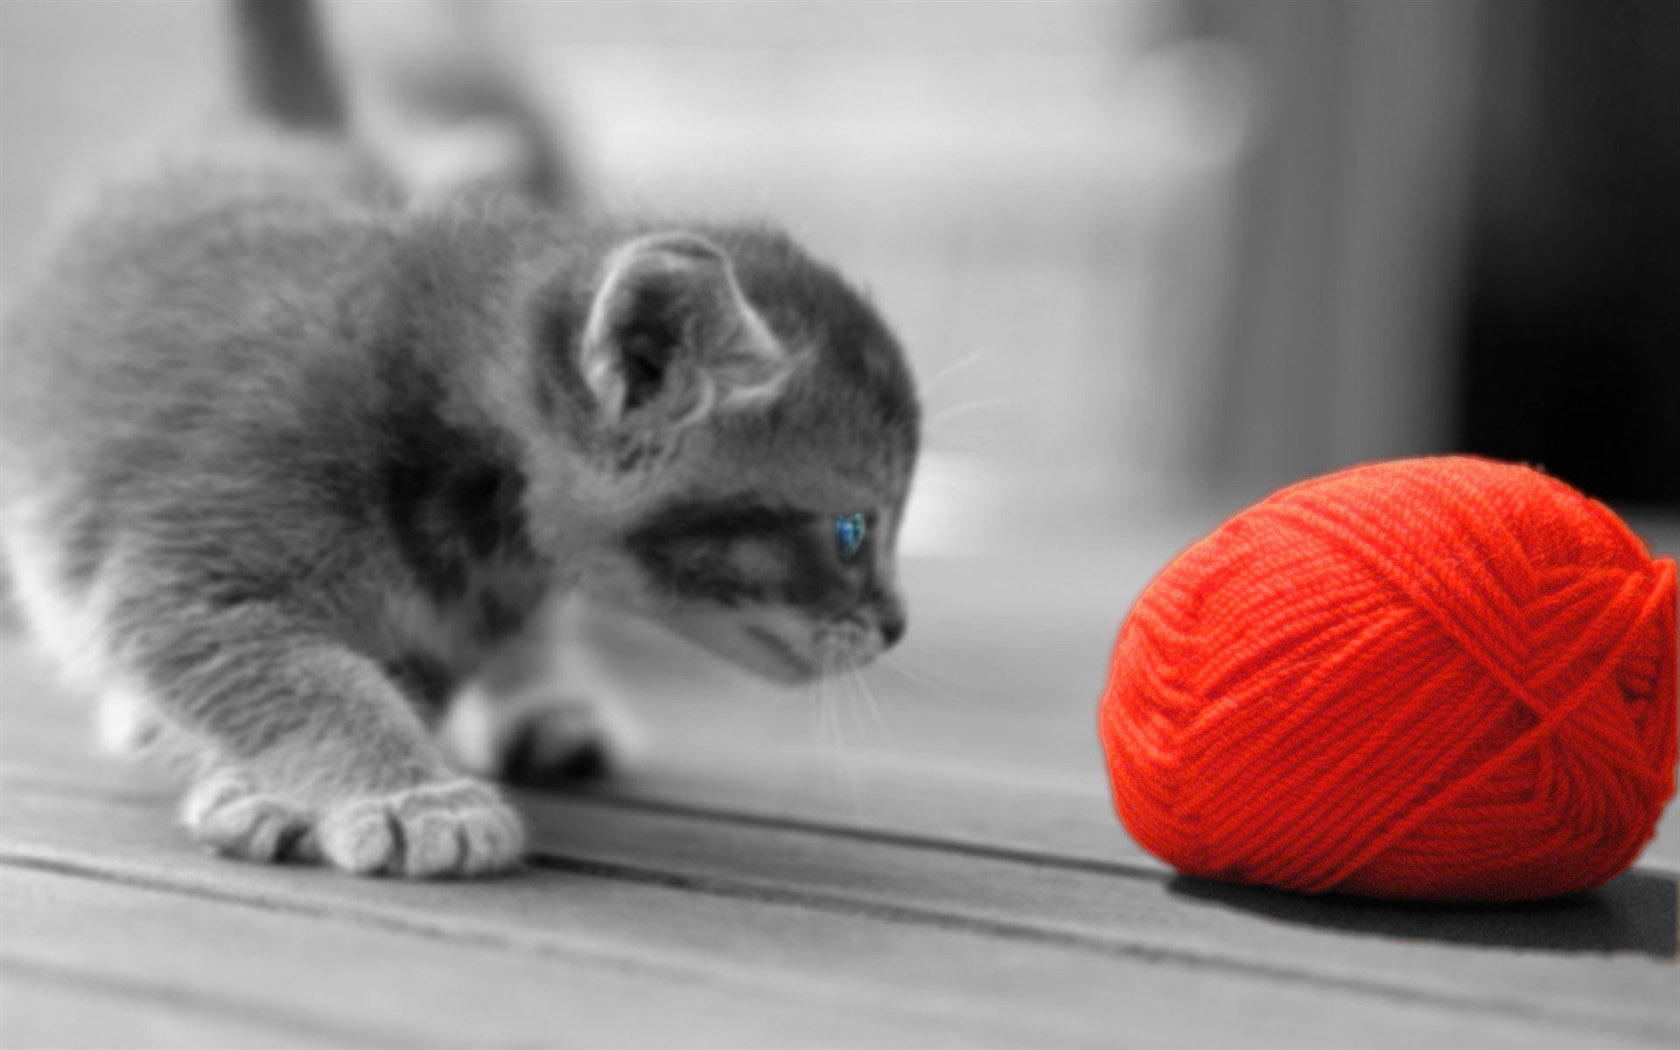 Kitten and yarn ball desktop background